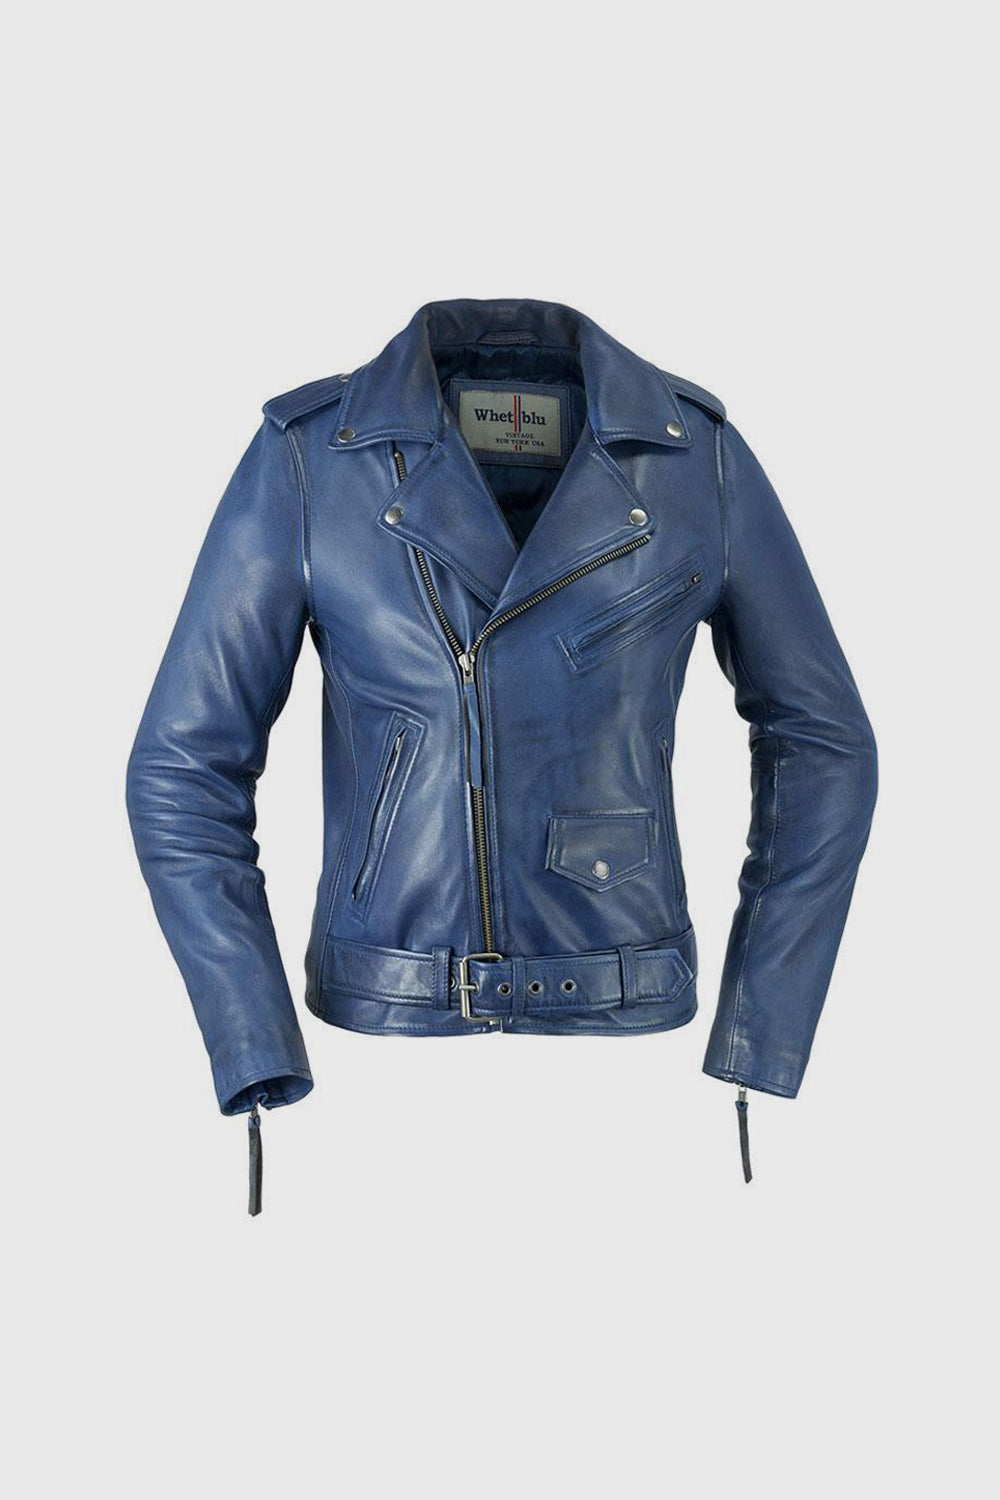 Rockstar - Womens Leather Jacket - Blue Women's Fashion Moto Leather Jacket Whet Blu NYC XS Blue 